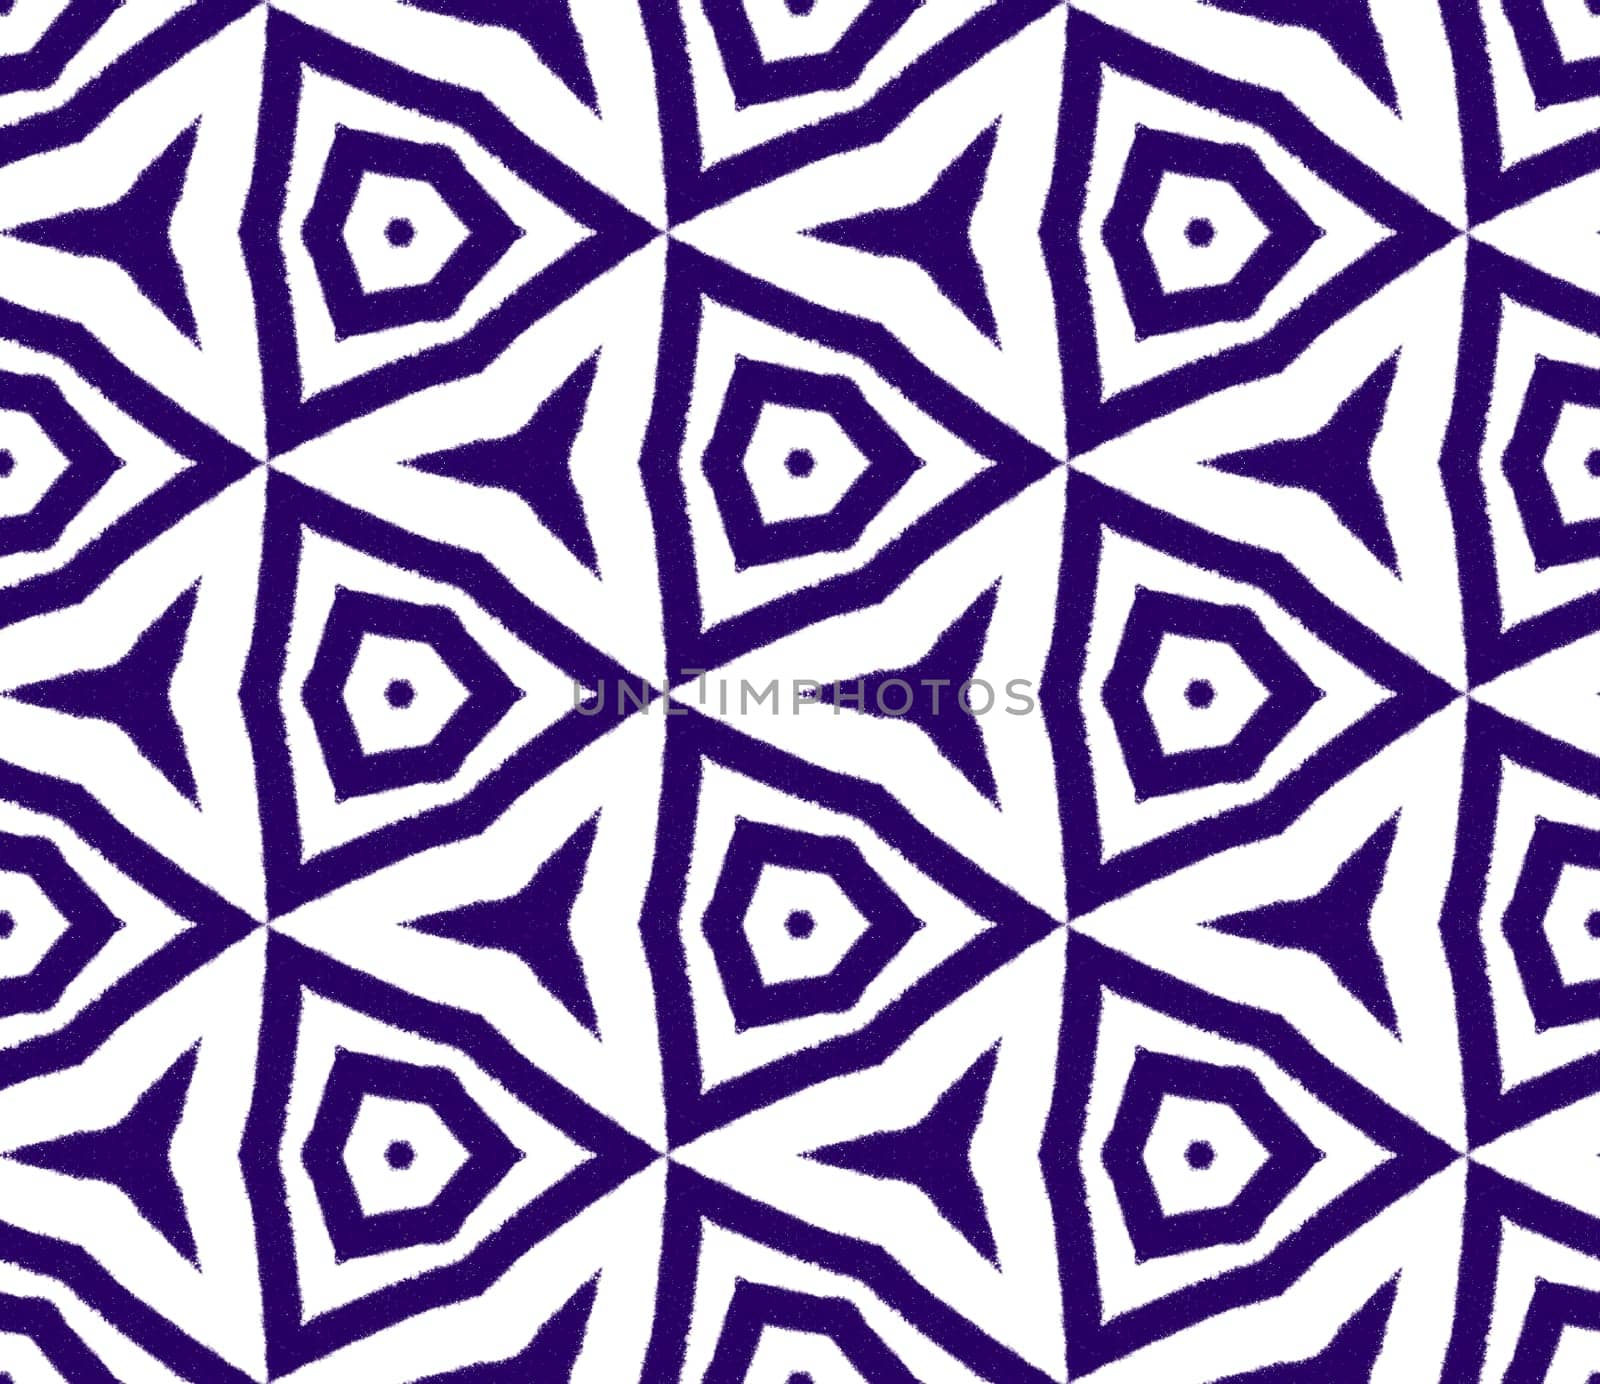 Mosaic seamless pattern. Purple symmetrical kaleidoscope background. Textile ready memorable print, swimwear fabric, wallpaper, wrapping. Retro mosaic seamless design.